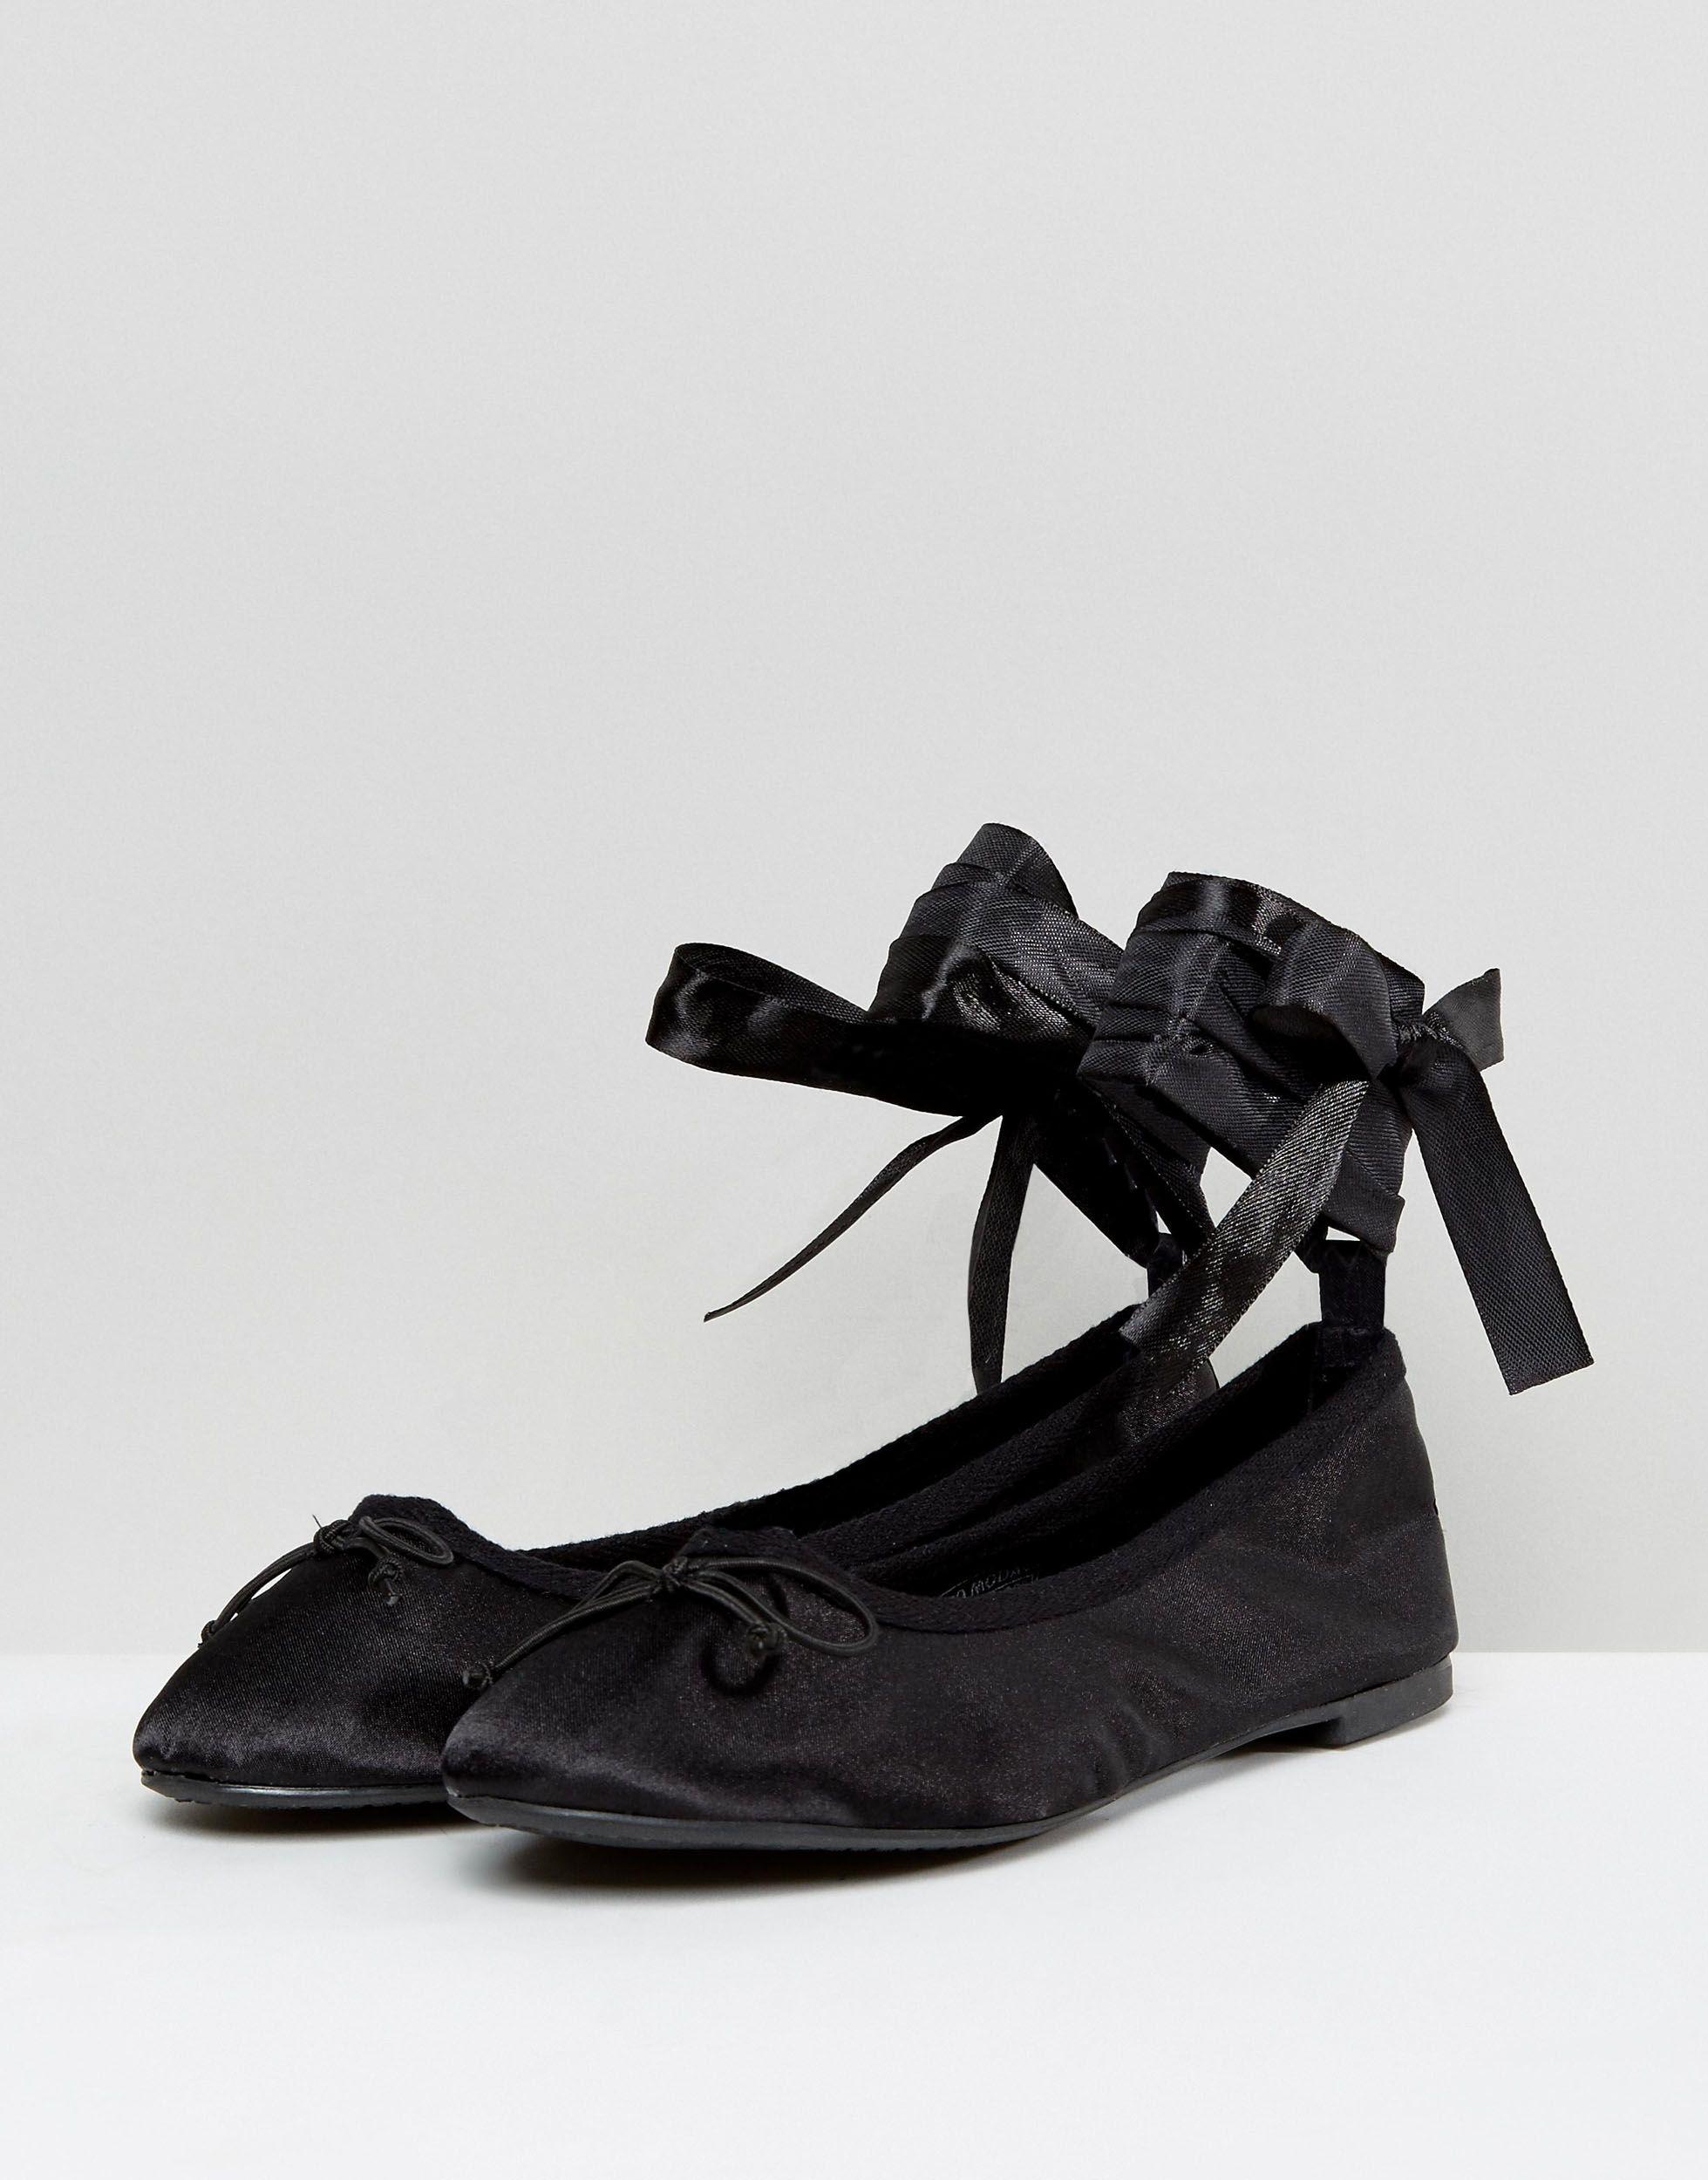 Vero Moda Satin Tie Up Ballerina Pumps in Black | Lyst